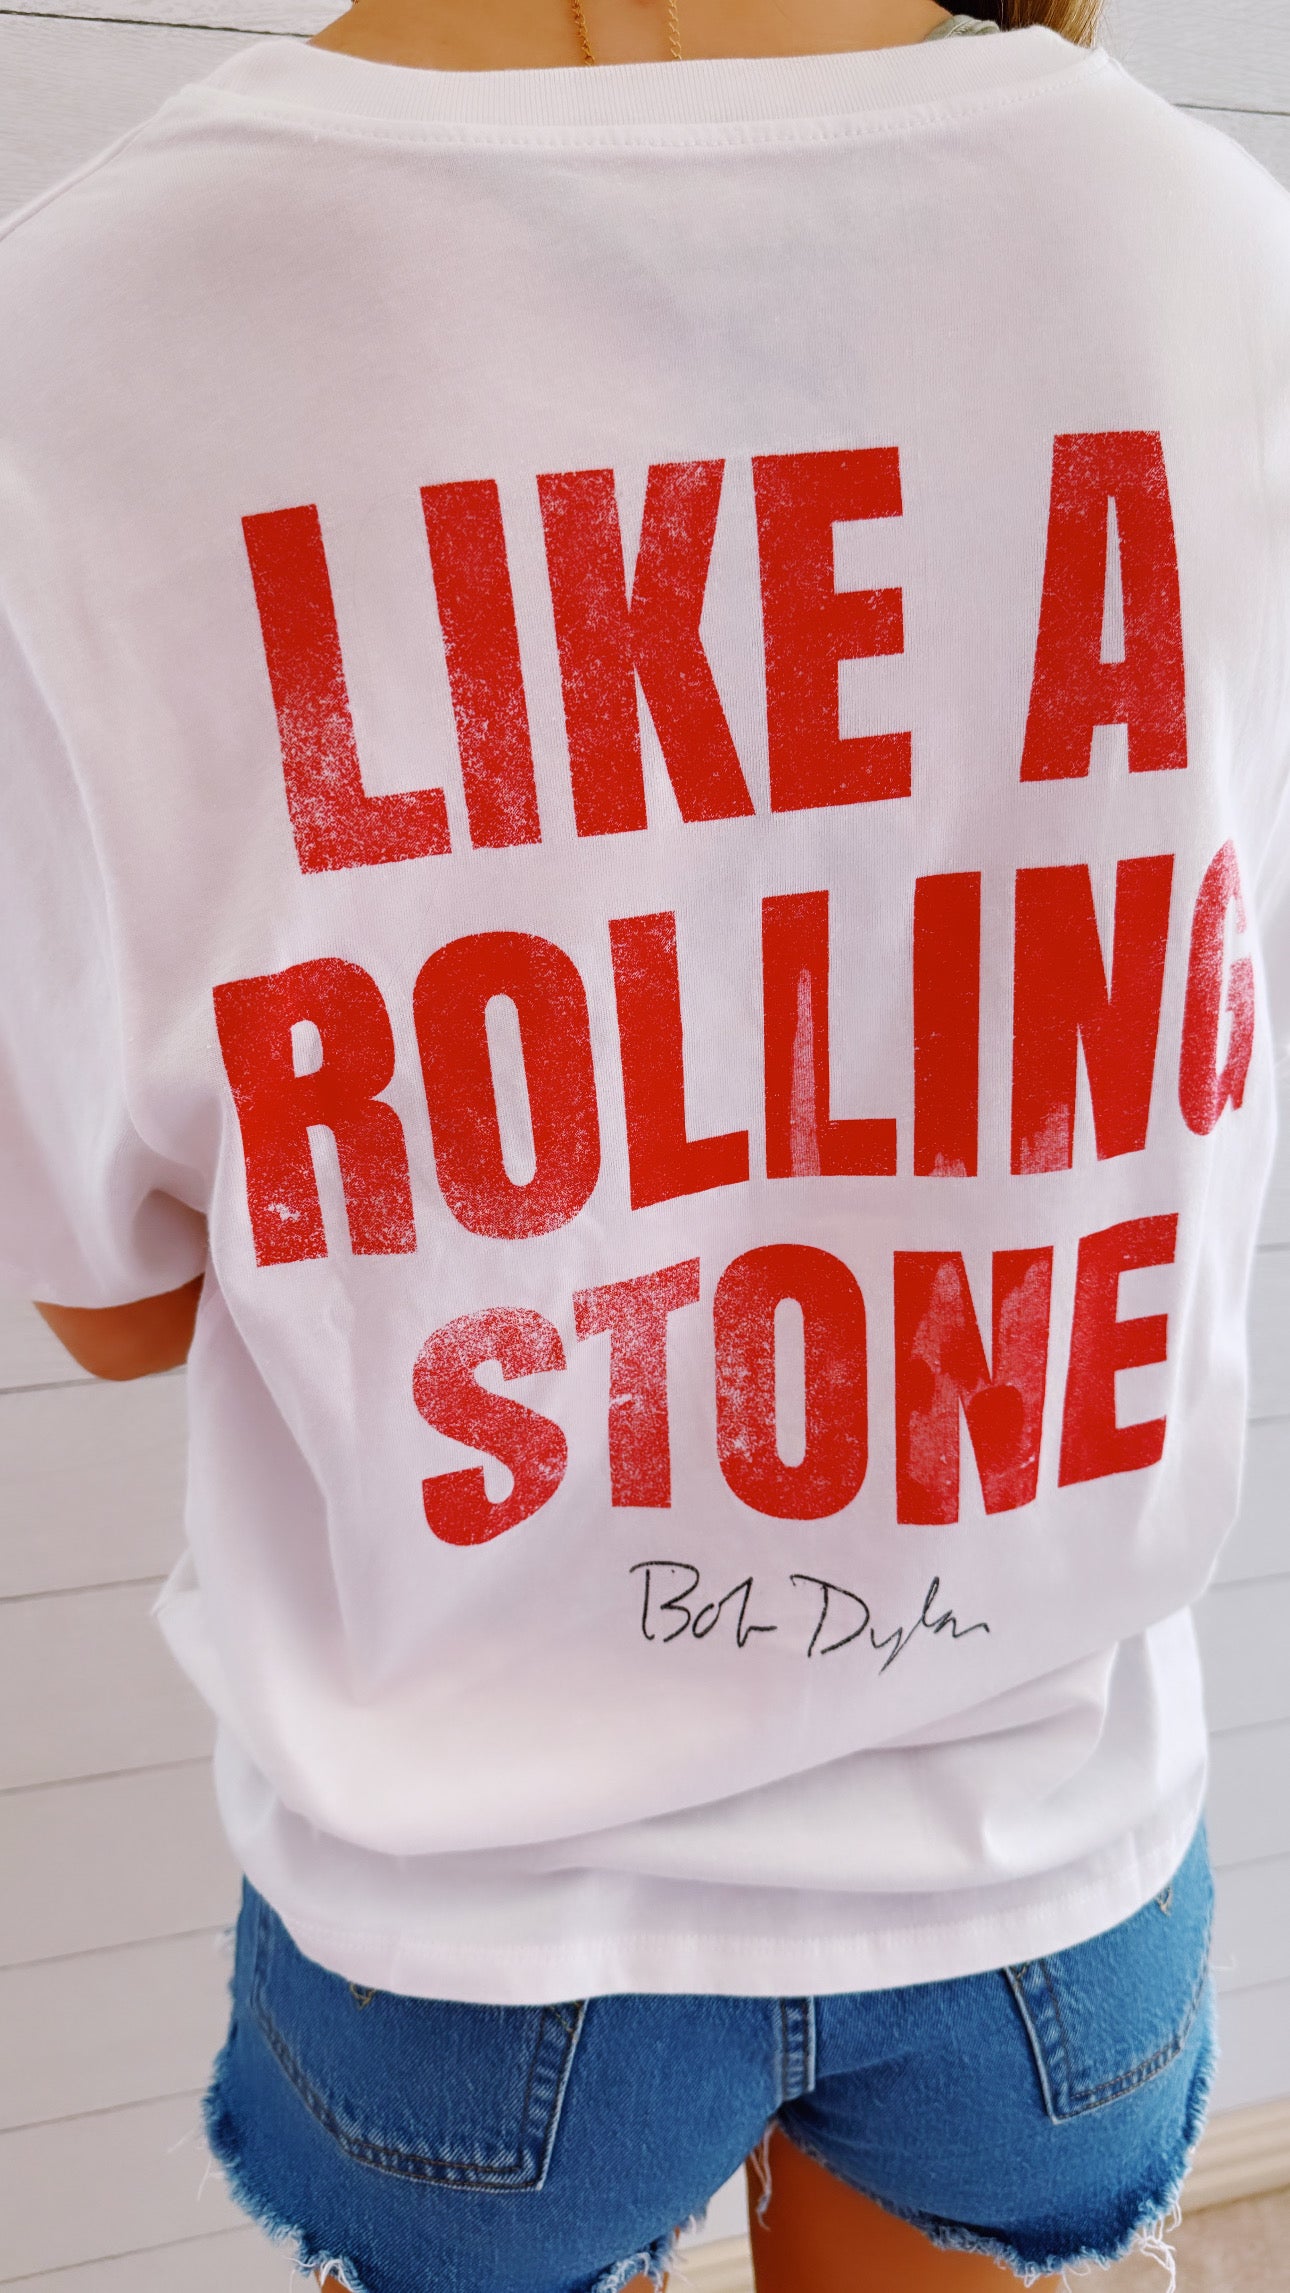 Bob Dylan Rolling Stone Tee